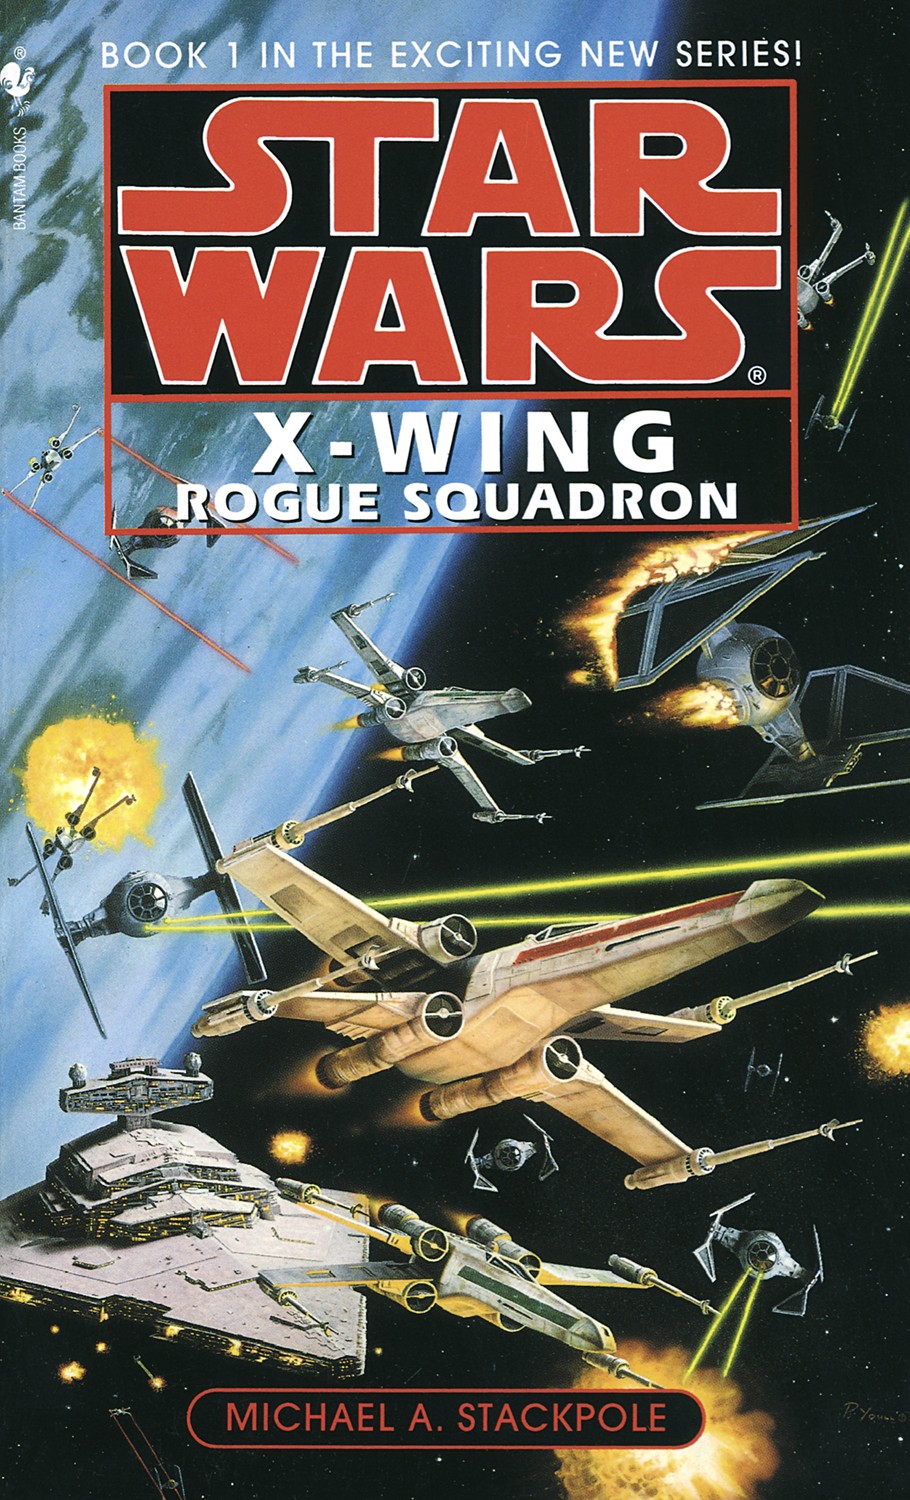 star wars rogue squadron codes